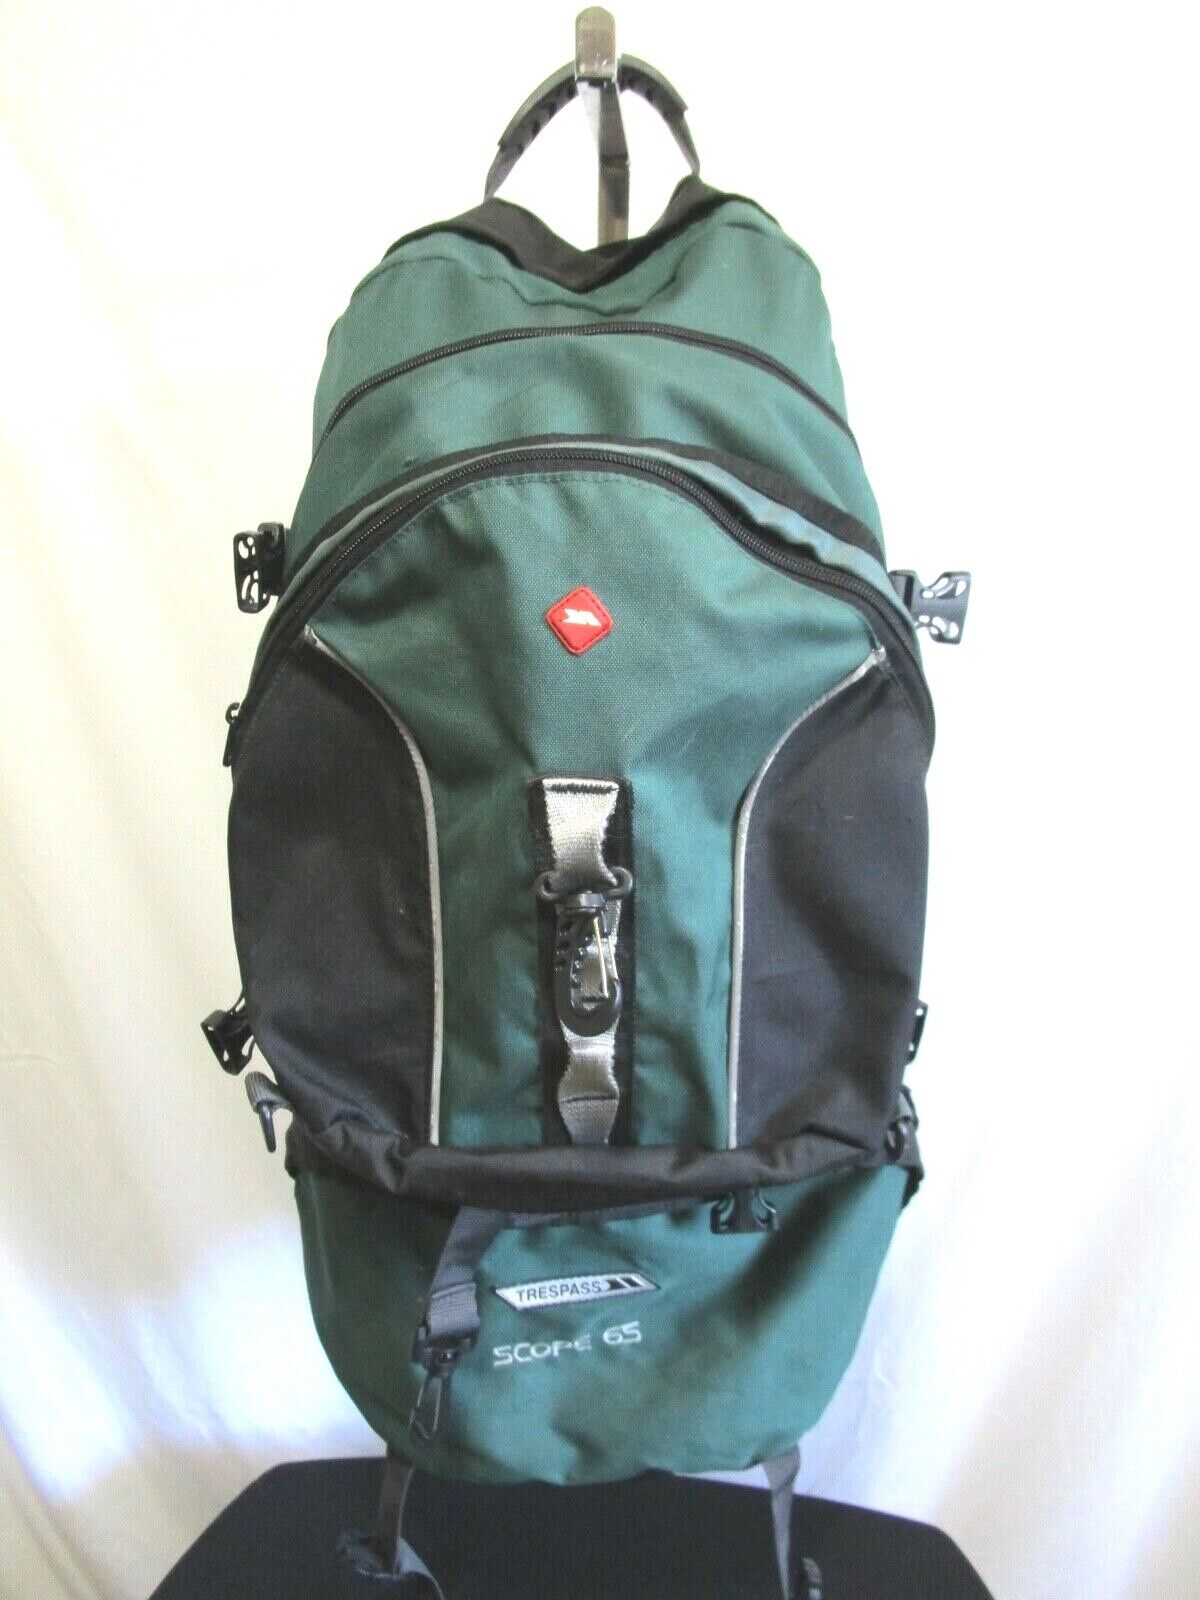 EUC! Trespass Scope 65 Green Hiking Travel Backpack/Rucksack w/ Detachable Bag